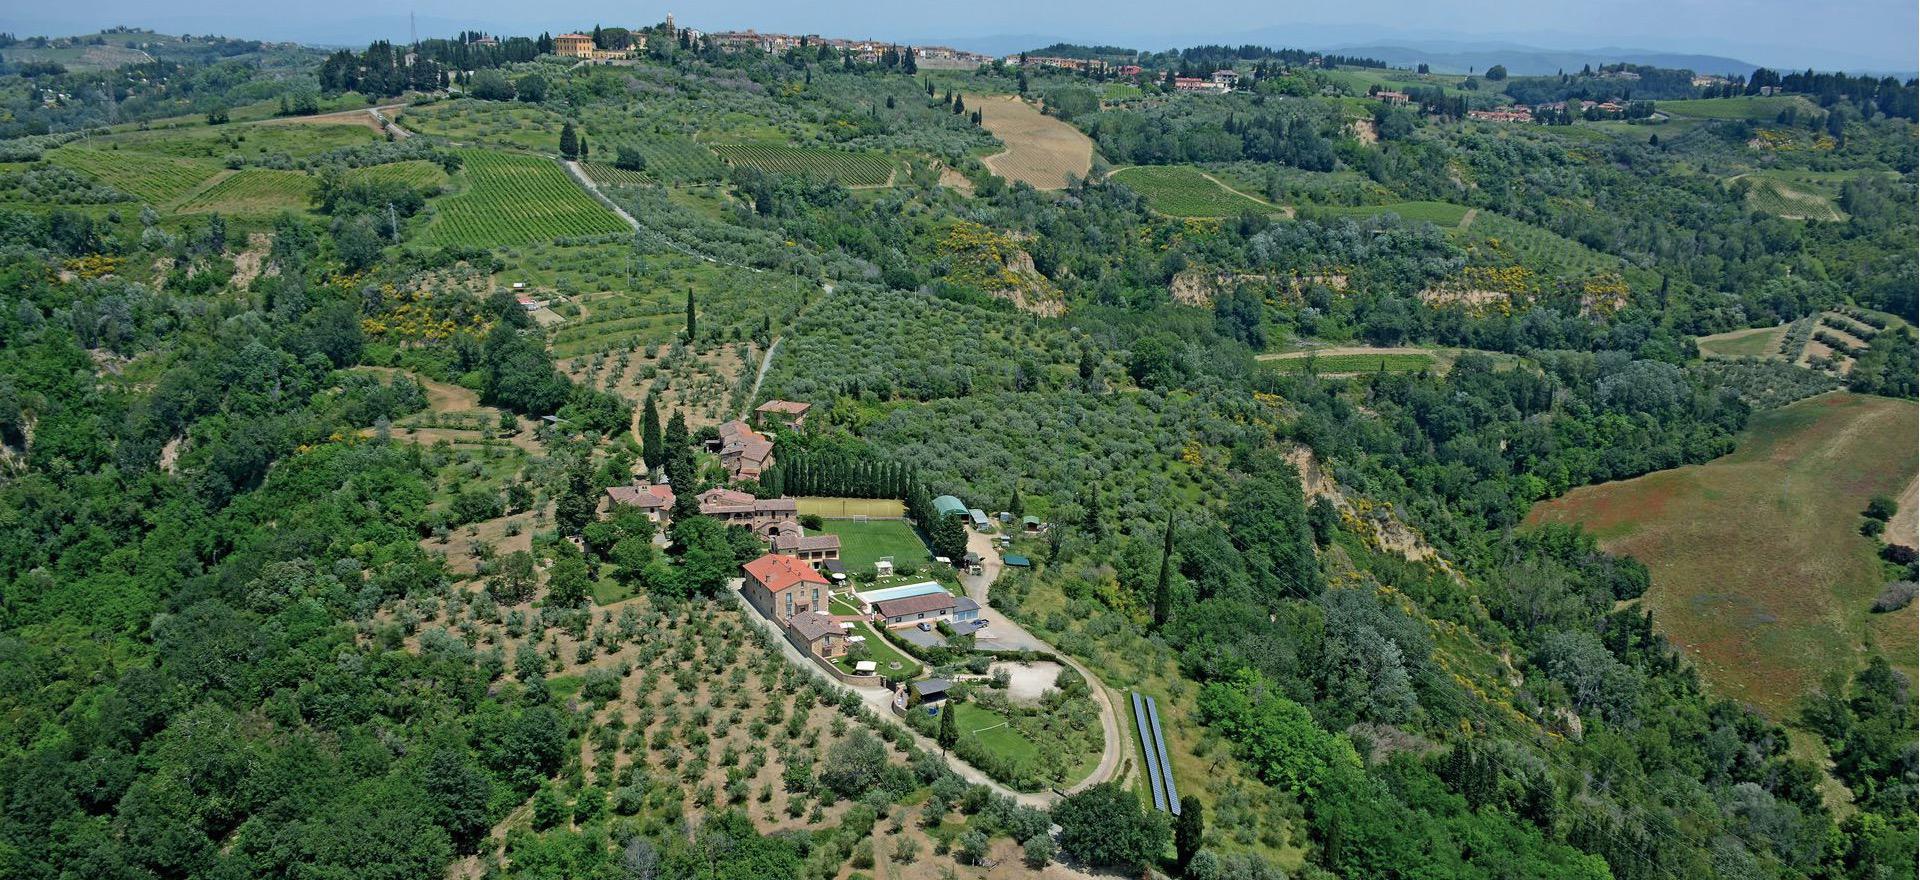 Agriturismo Toscana Agriturismo per famiglie in Toscana